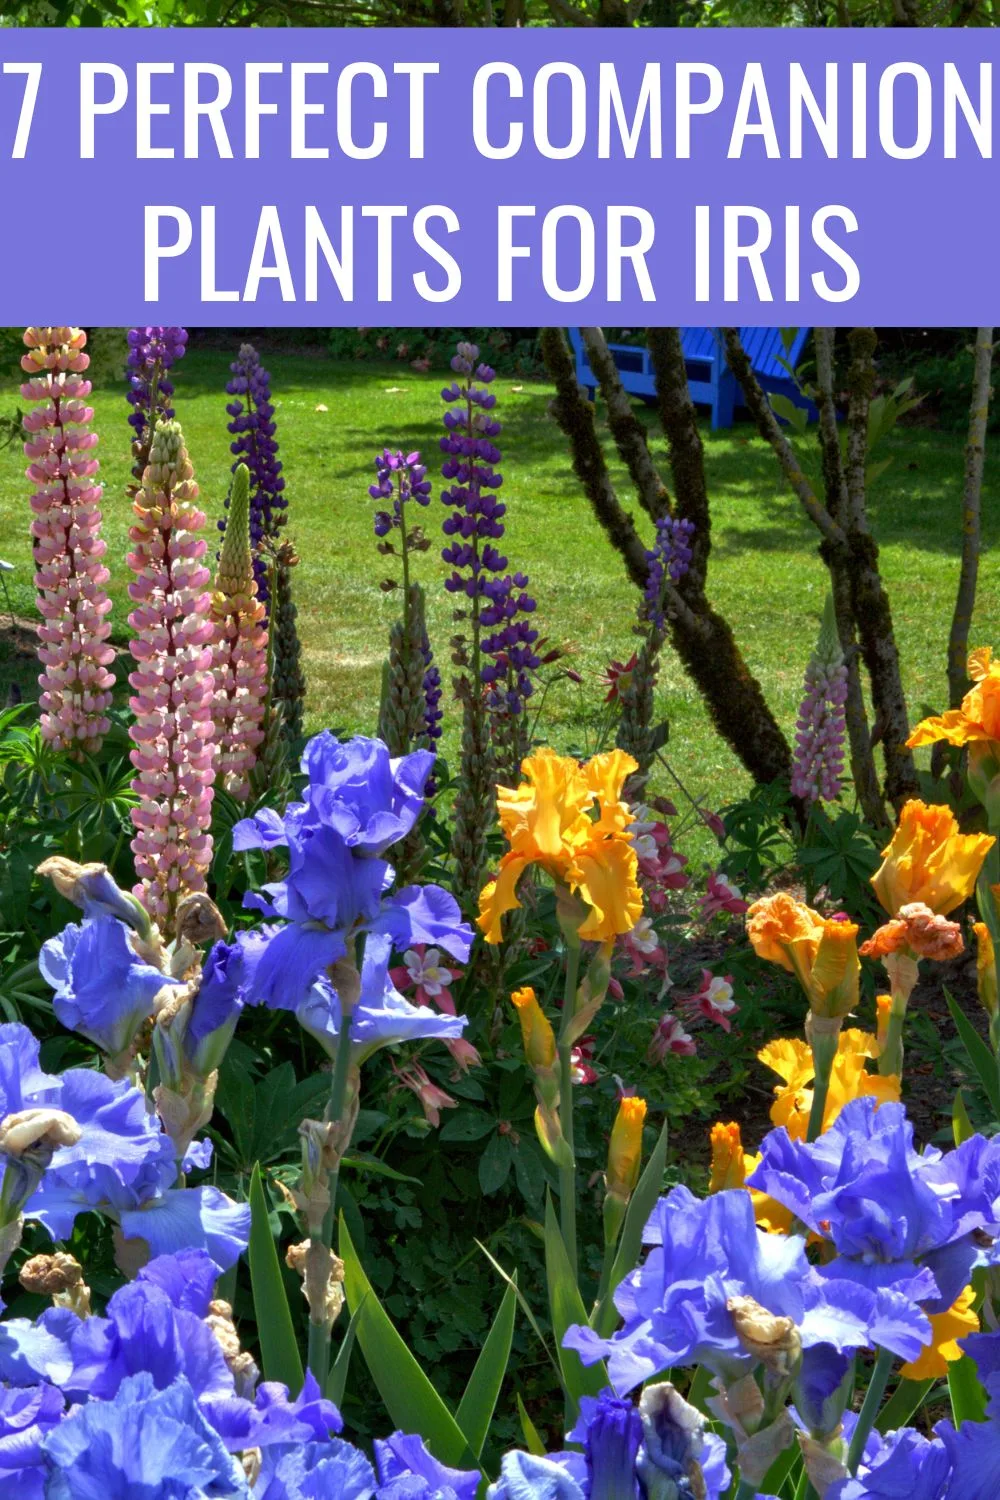 7 perfect companion plants for iris.